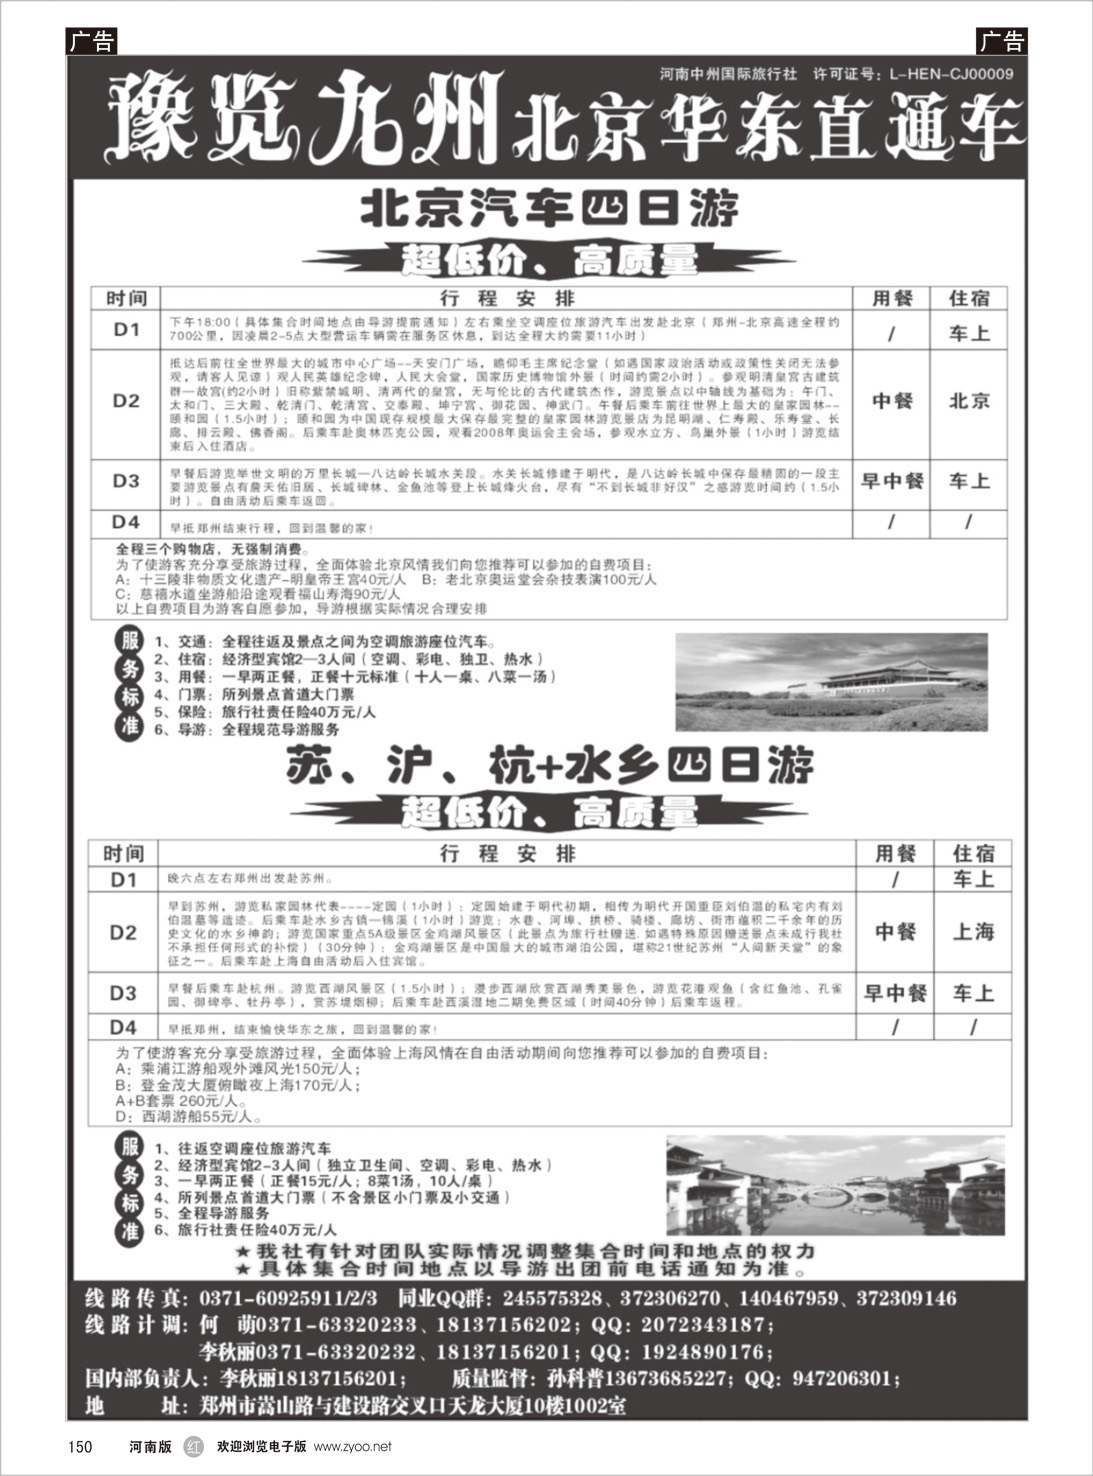 r150 【预览九州】北京华东线 -预览九州